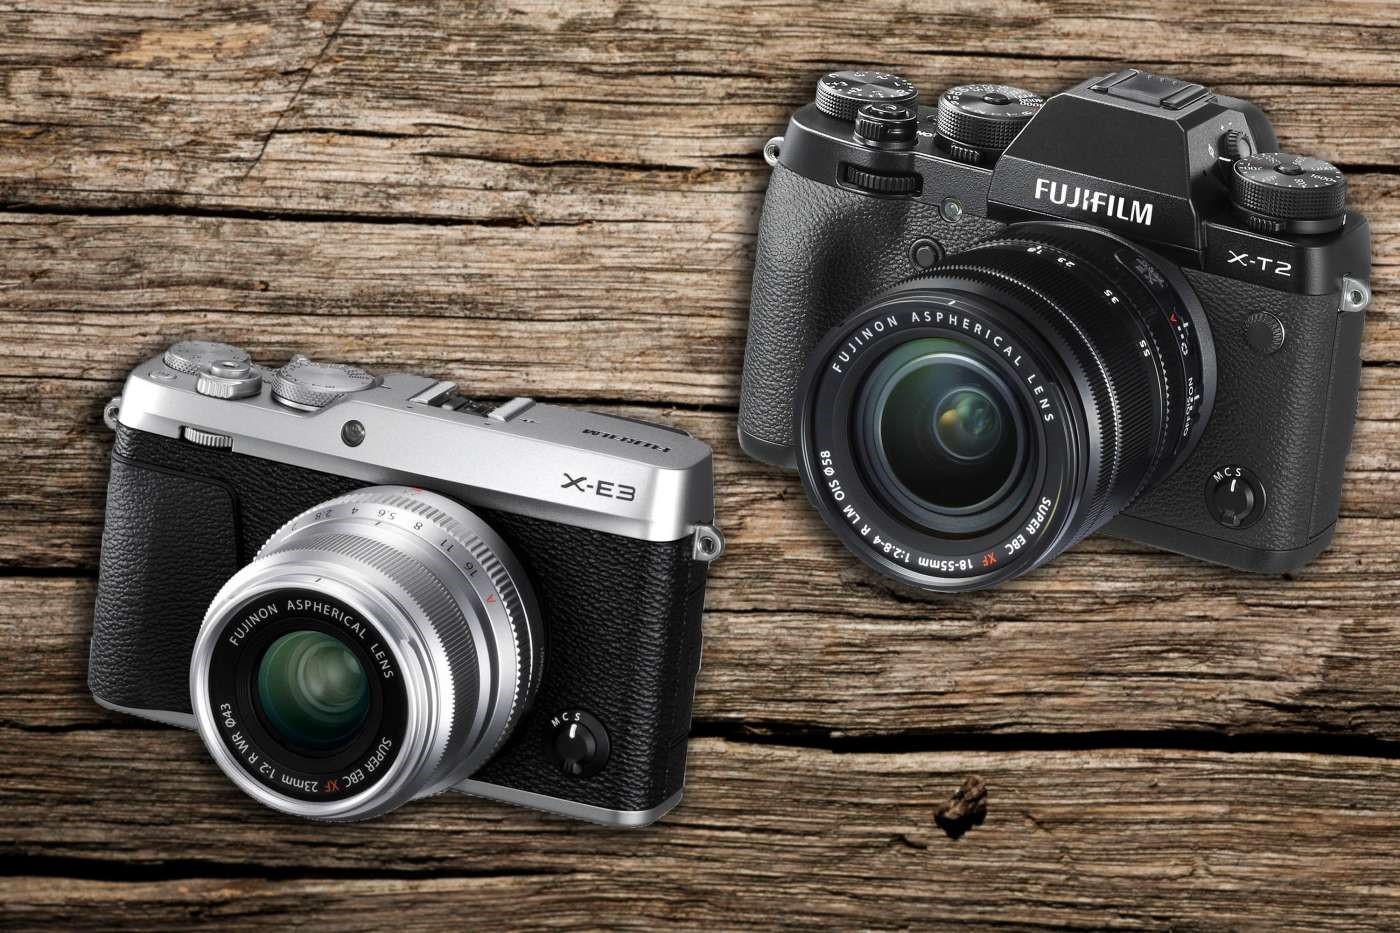 Fujifilm X-E3 в сравнении с Fujifilm X-T2 — что лучше?